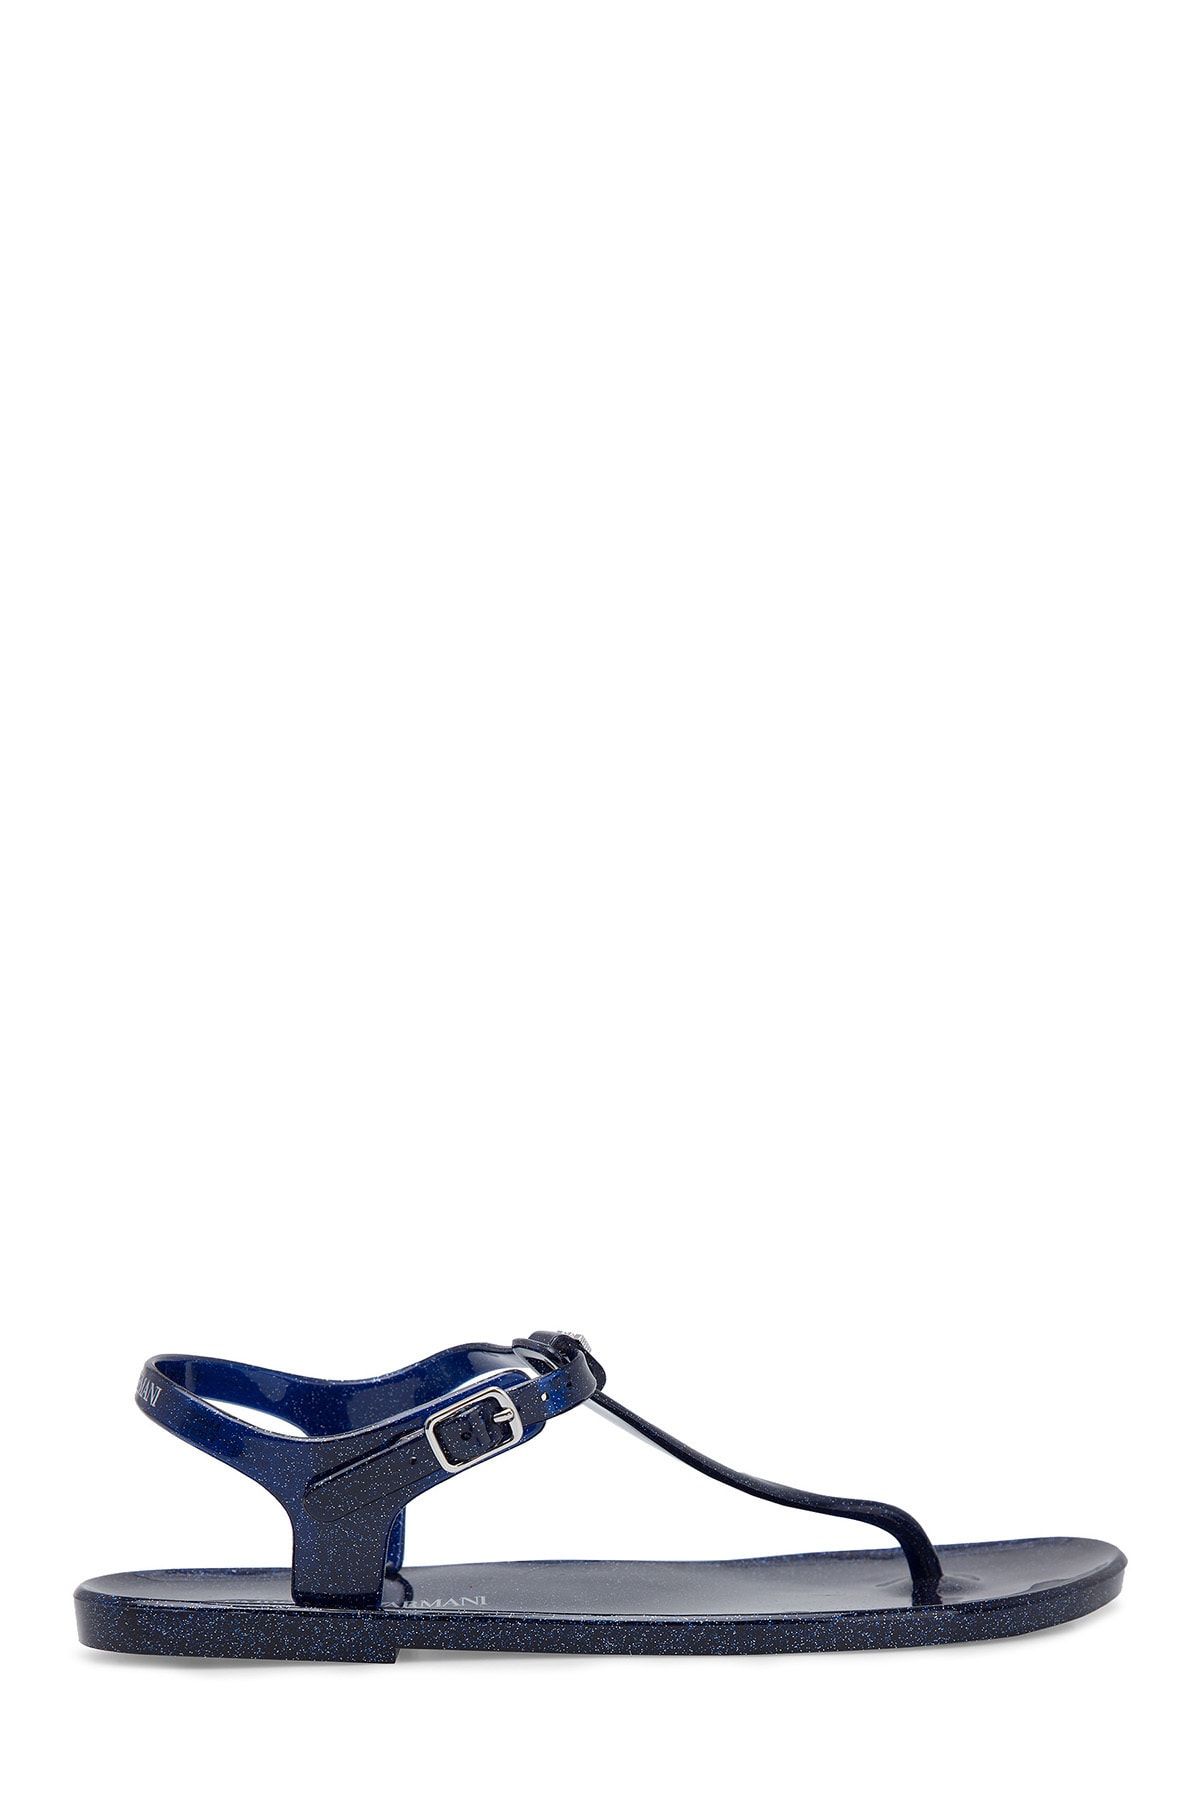 Emporio Armani Kadın Lacivert Sandalet X3qs06 Xl816 M605